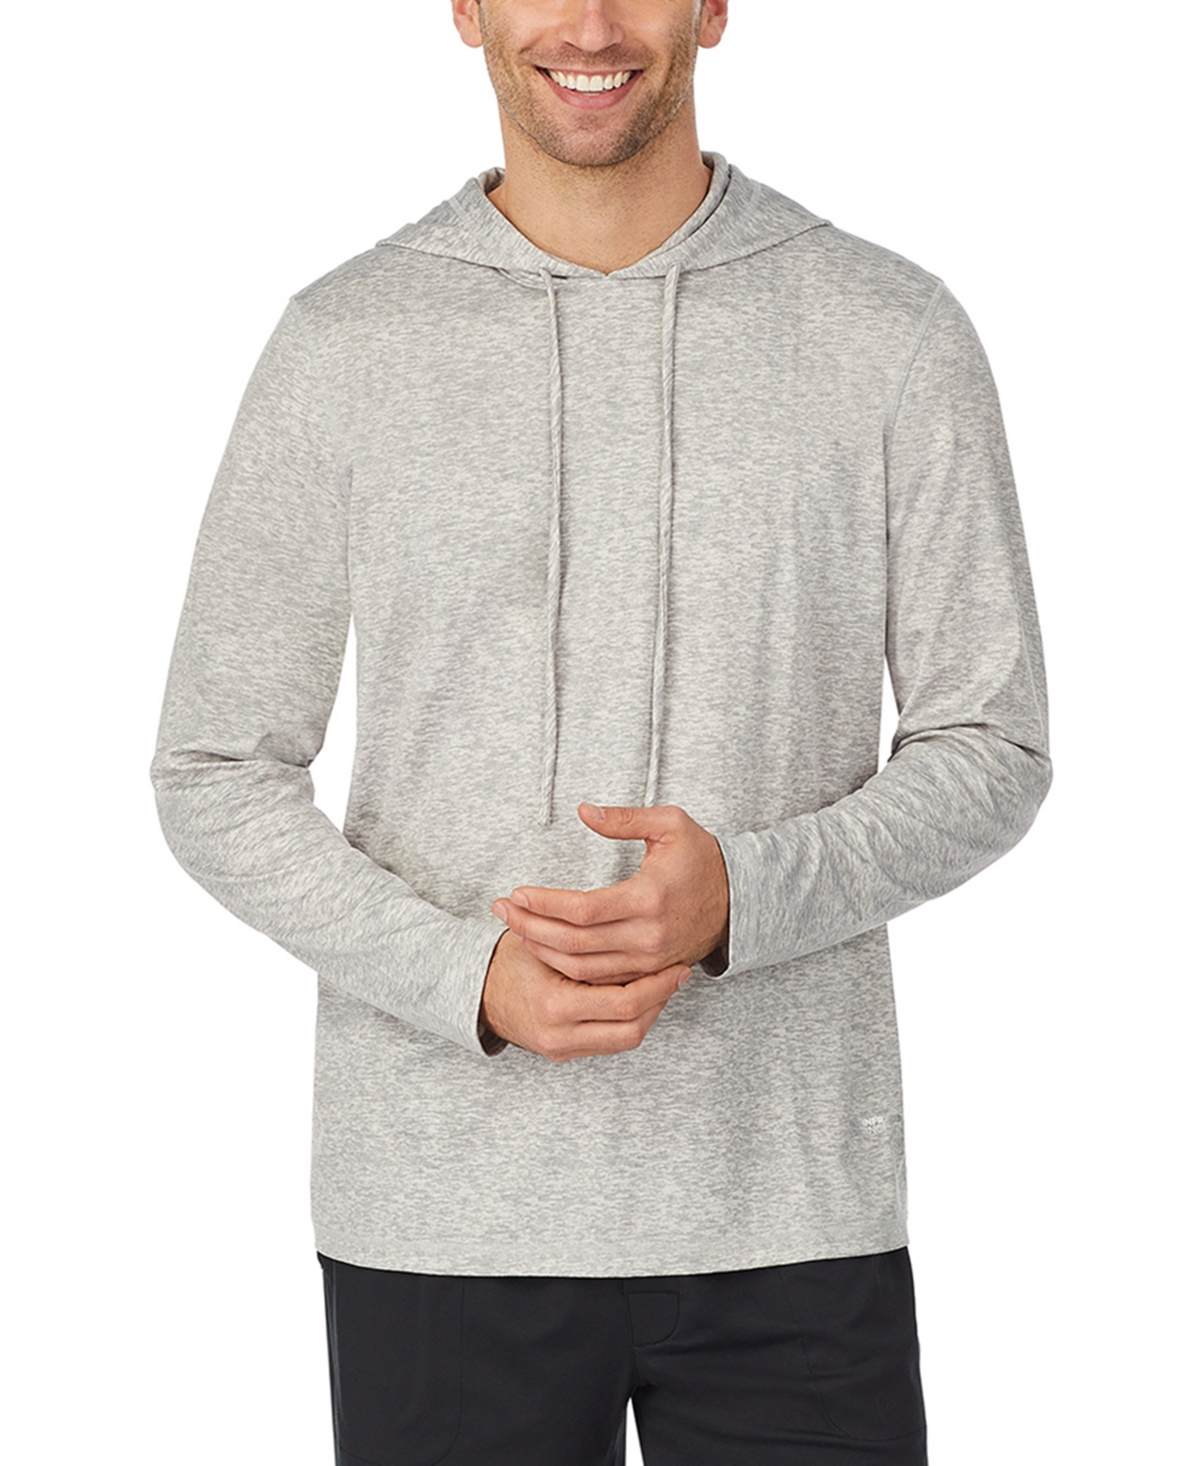 Men's Far-Infrared Enhance Sleep Hooded Sweatshirt - Black